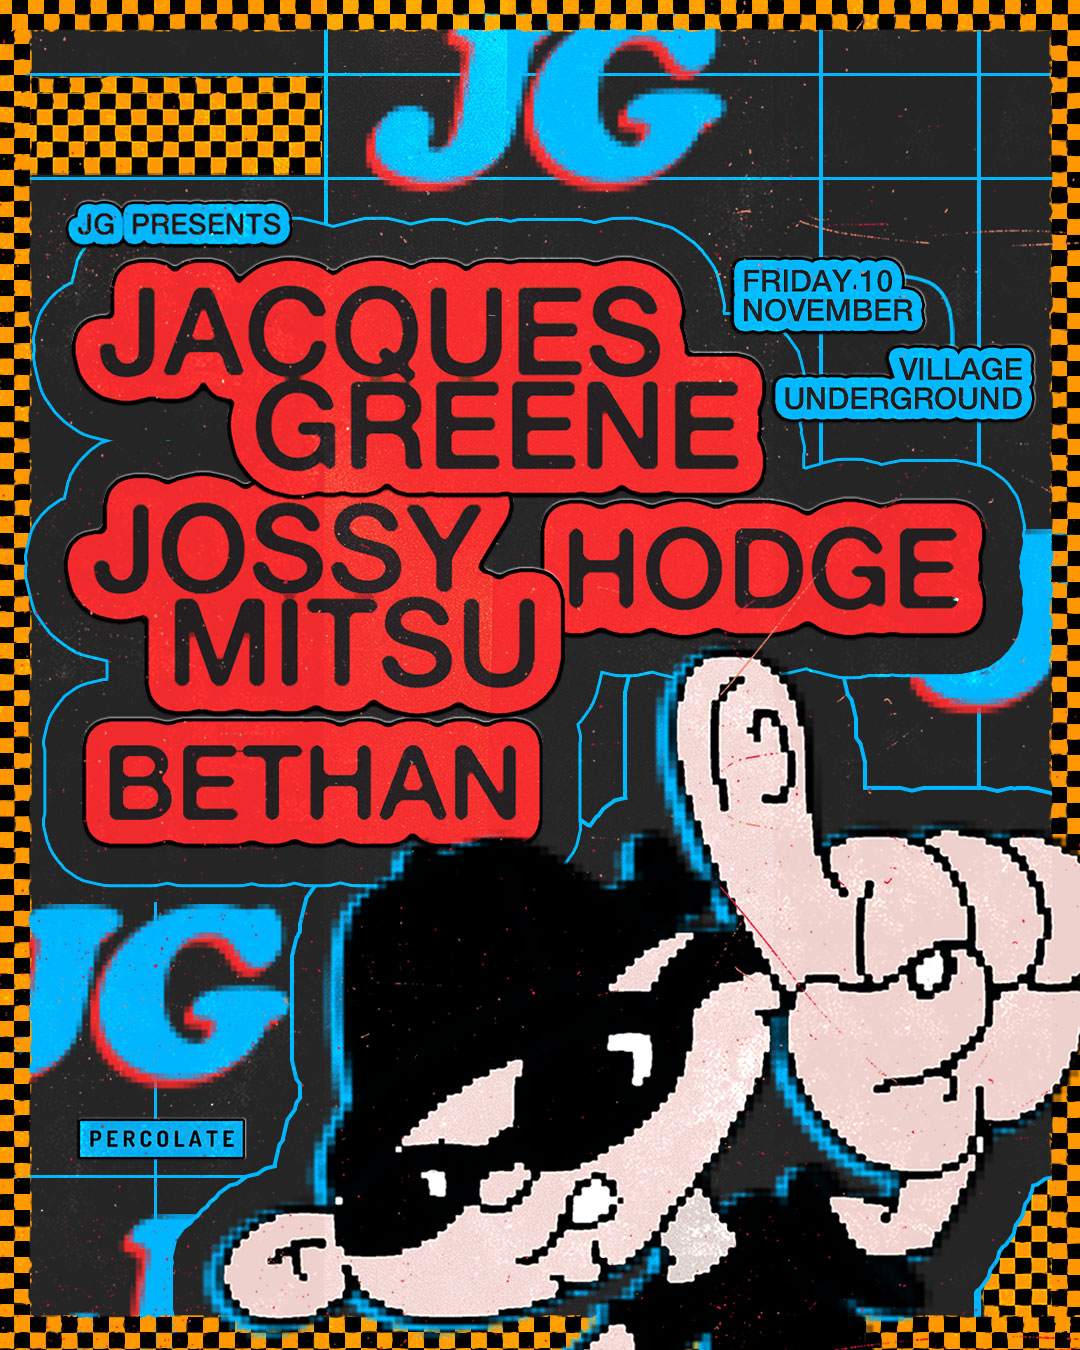 JG presents: Jacques Greene, Jossy Mitsu, Hodge, Bethan - Página frontal